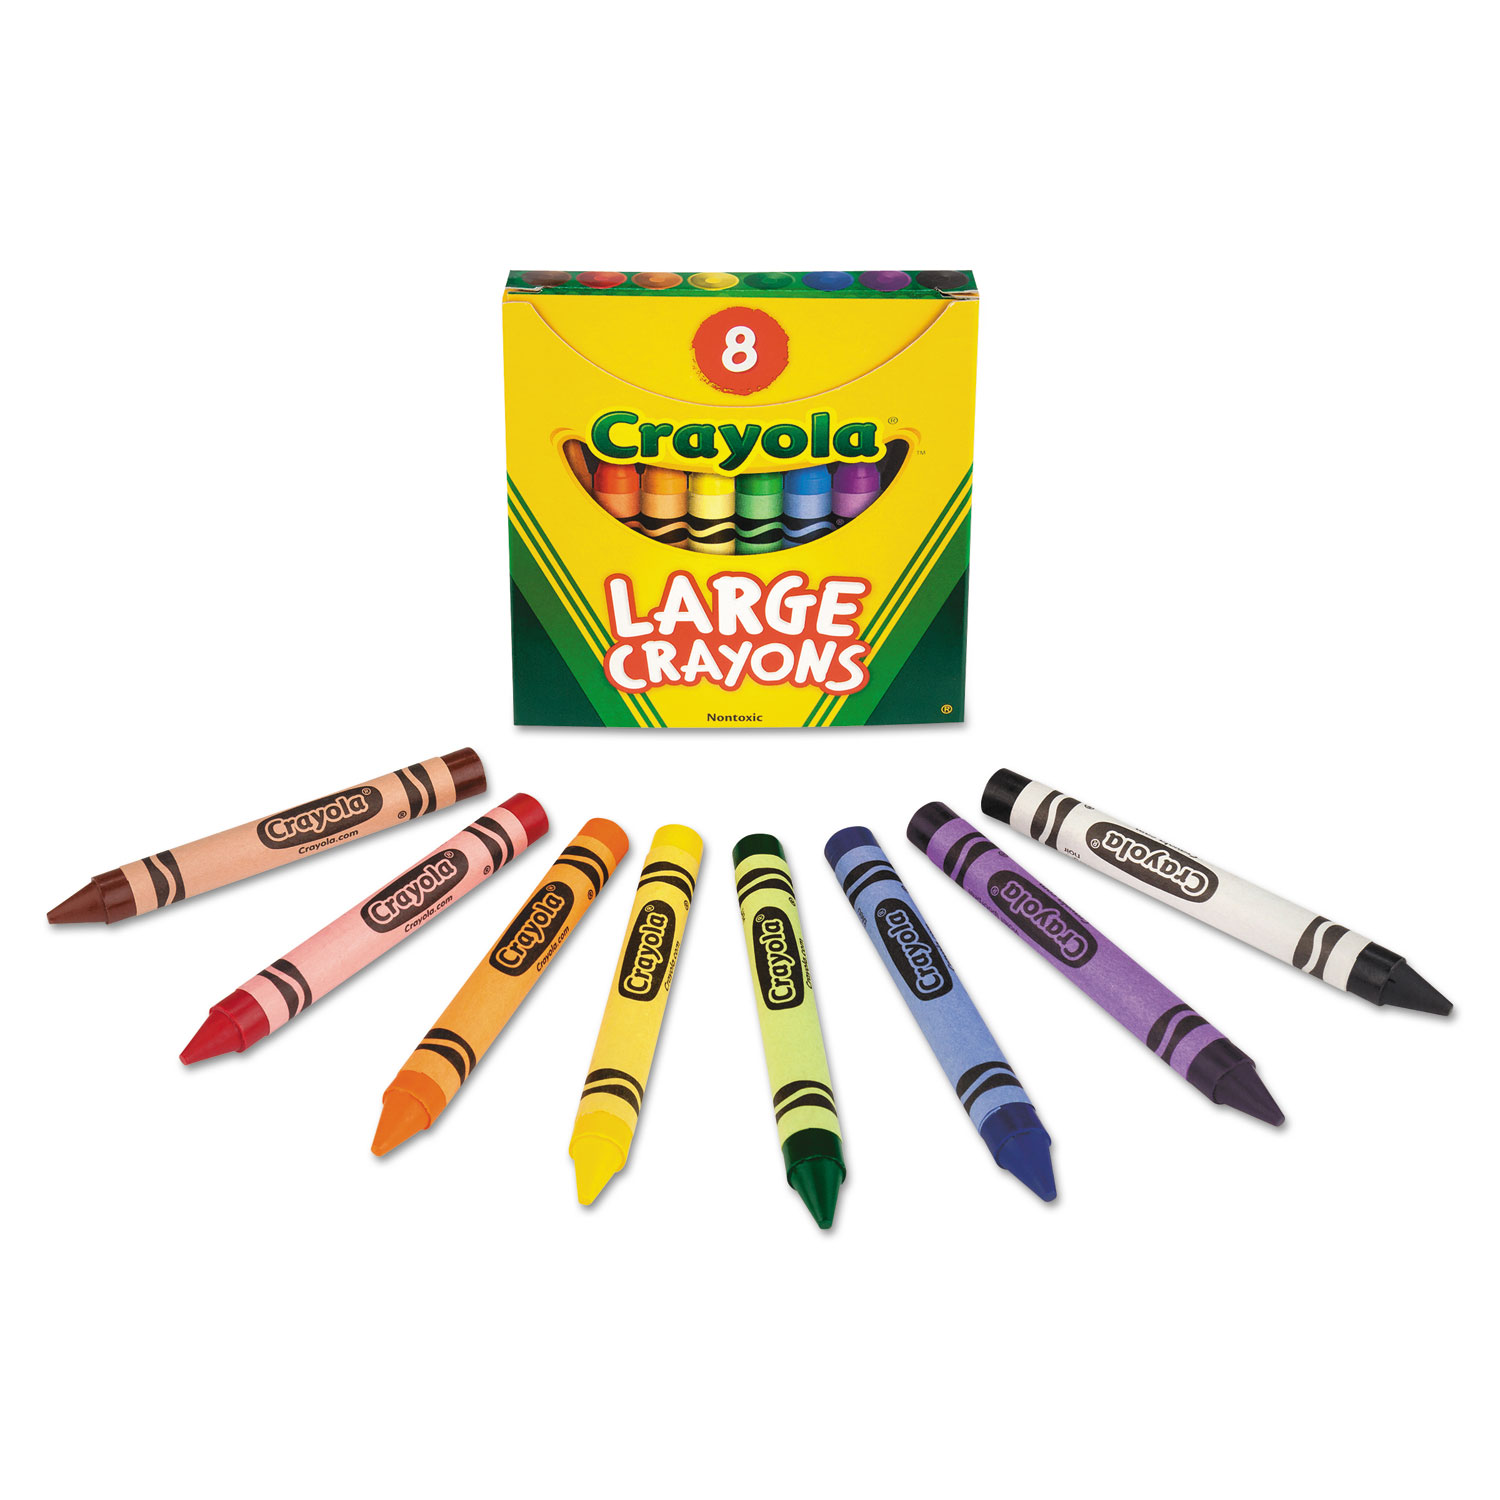 Binney & Smith Crayola Standard Crayon Set, Lift-Lid Box, Assorted Colors, Box of 24